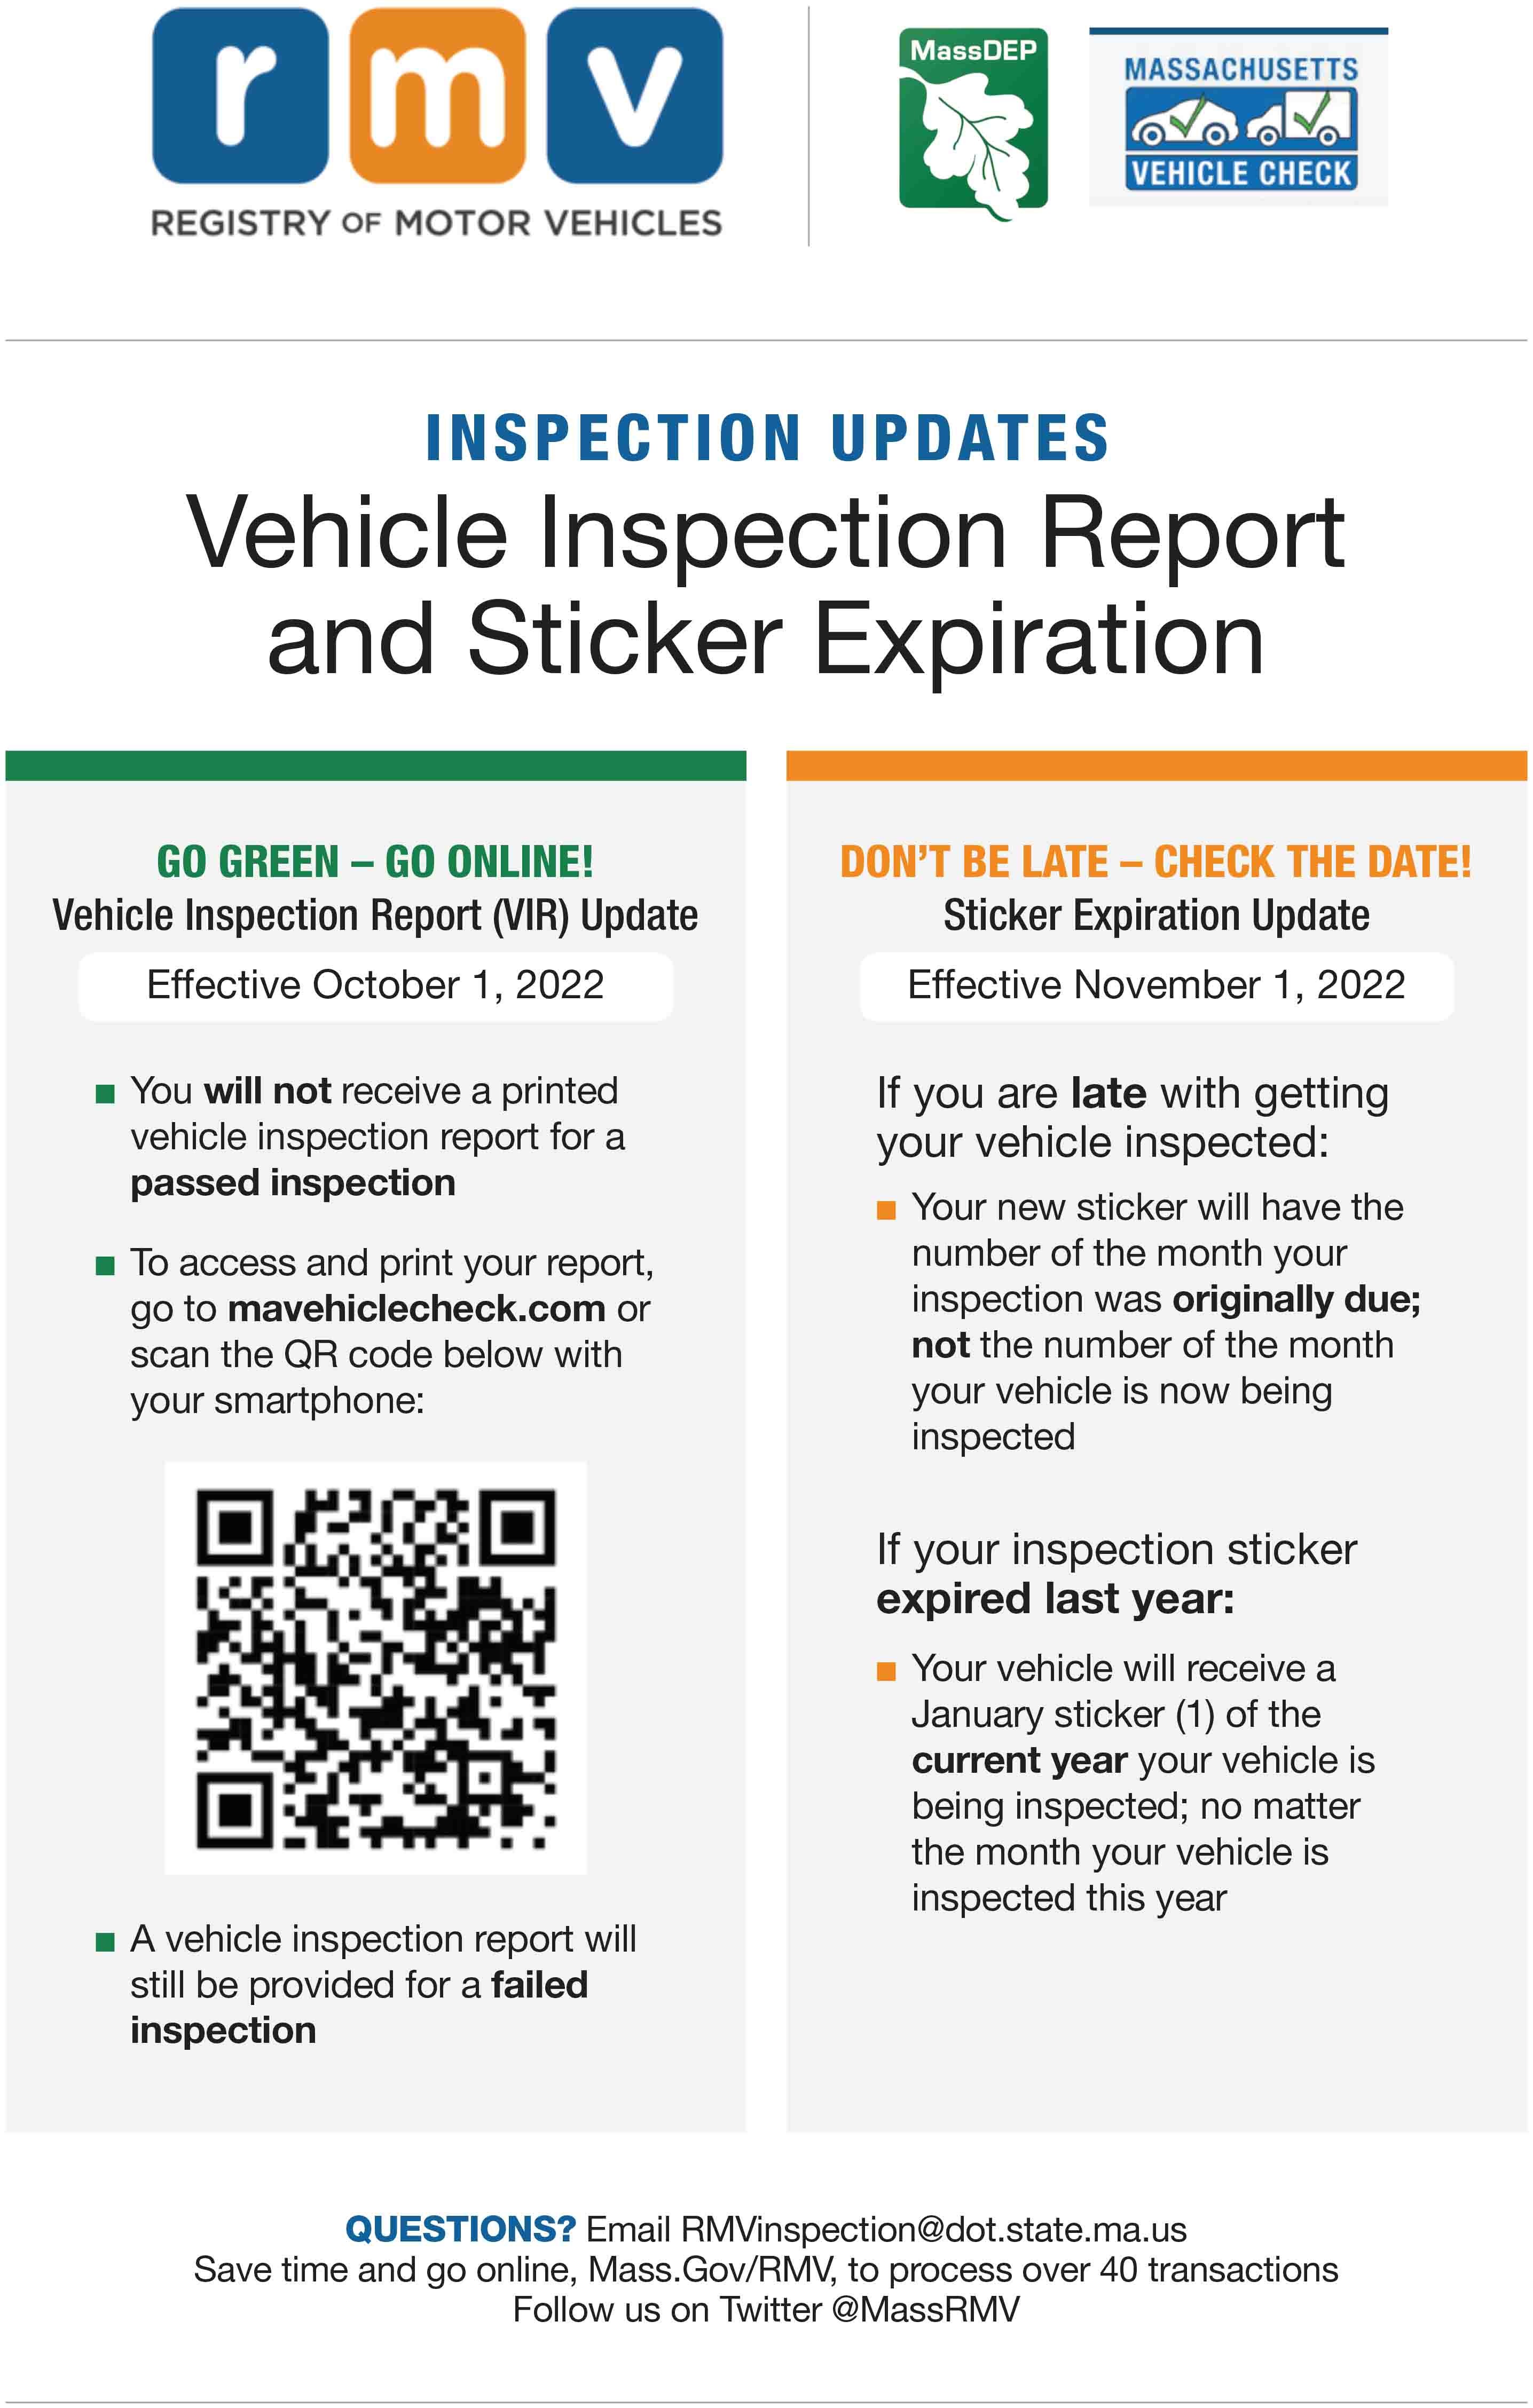 Vehicle Inspection Pamphlet from Massachusetts Registry of Motor Vehicles